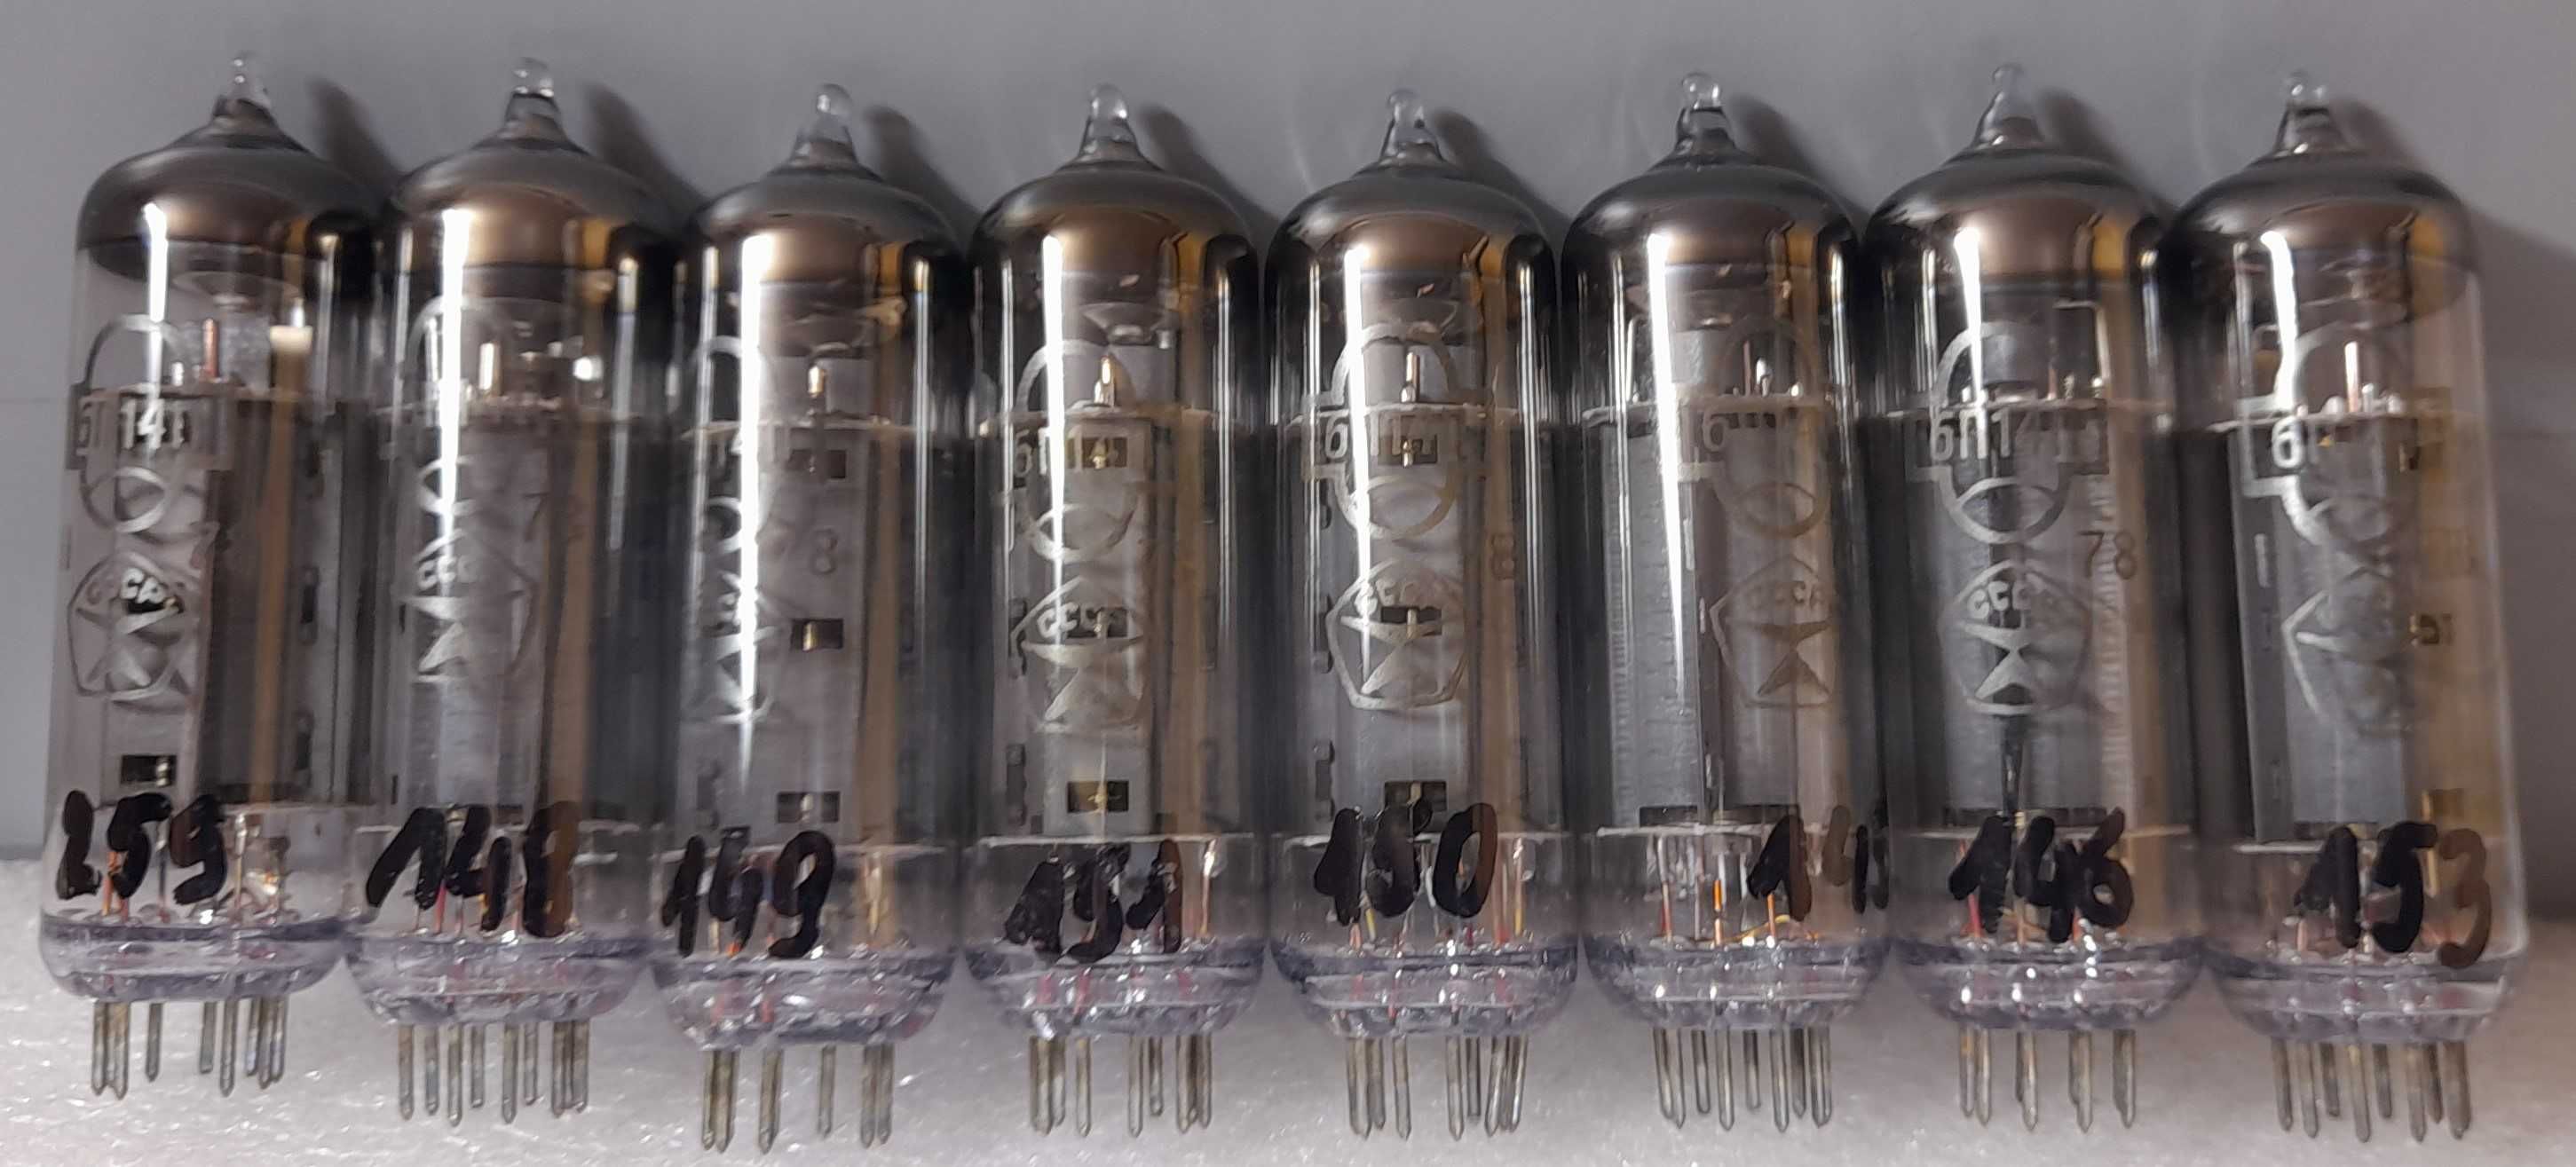 Lampy elektronowe 6П14П (6P14P) Reflector NOS ok. 50szt